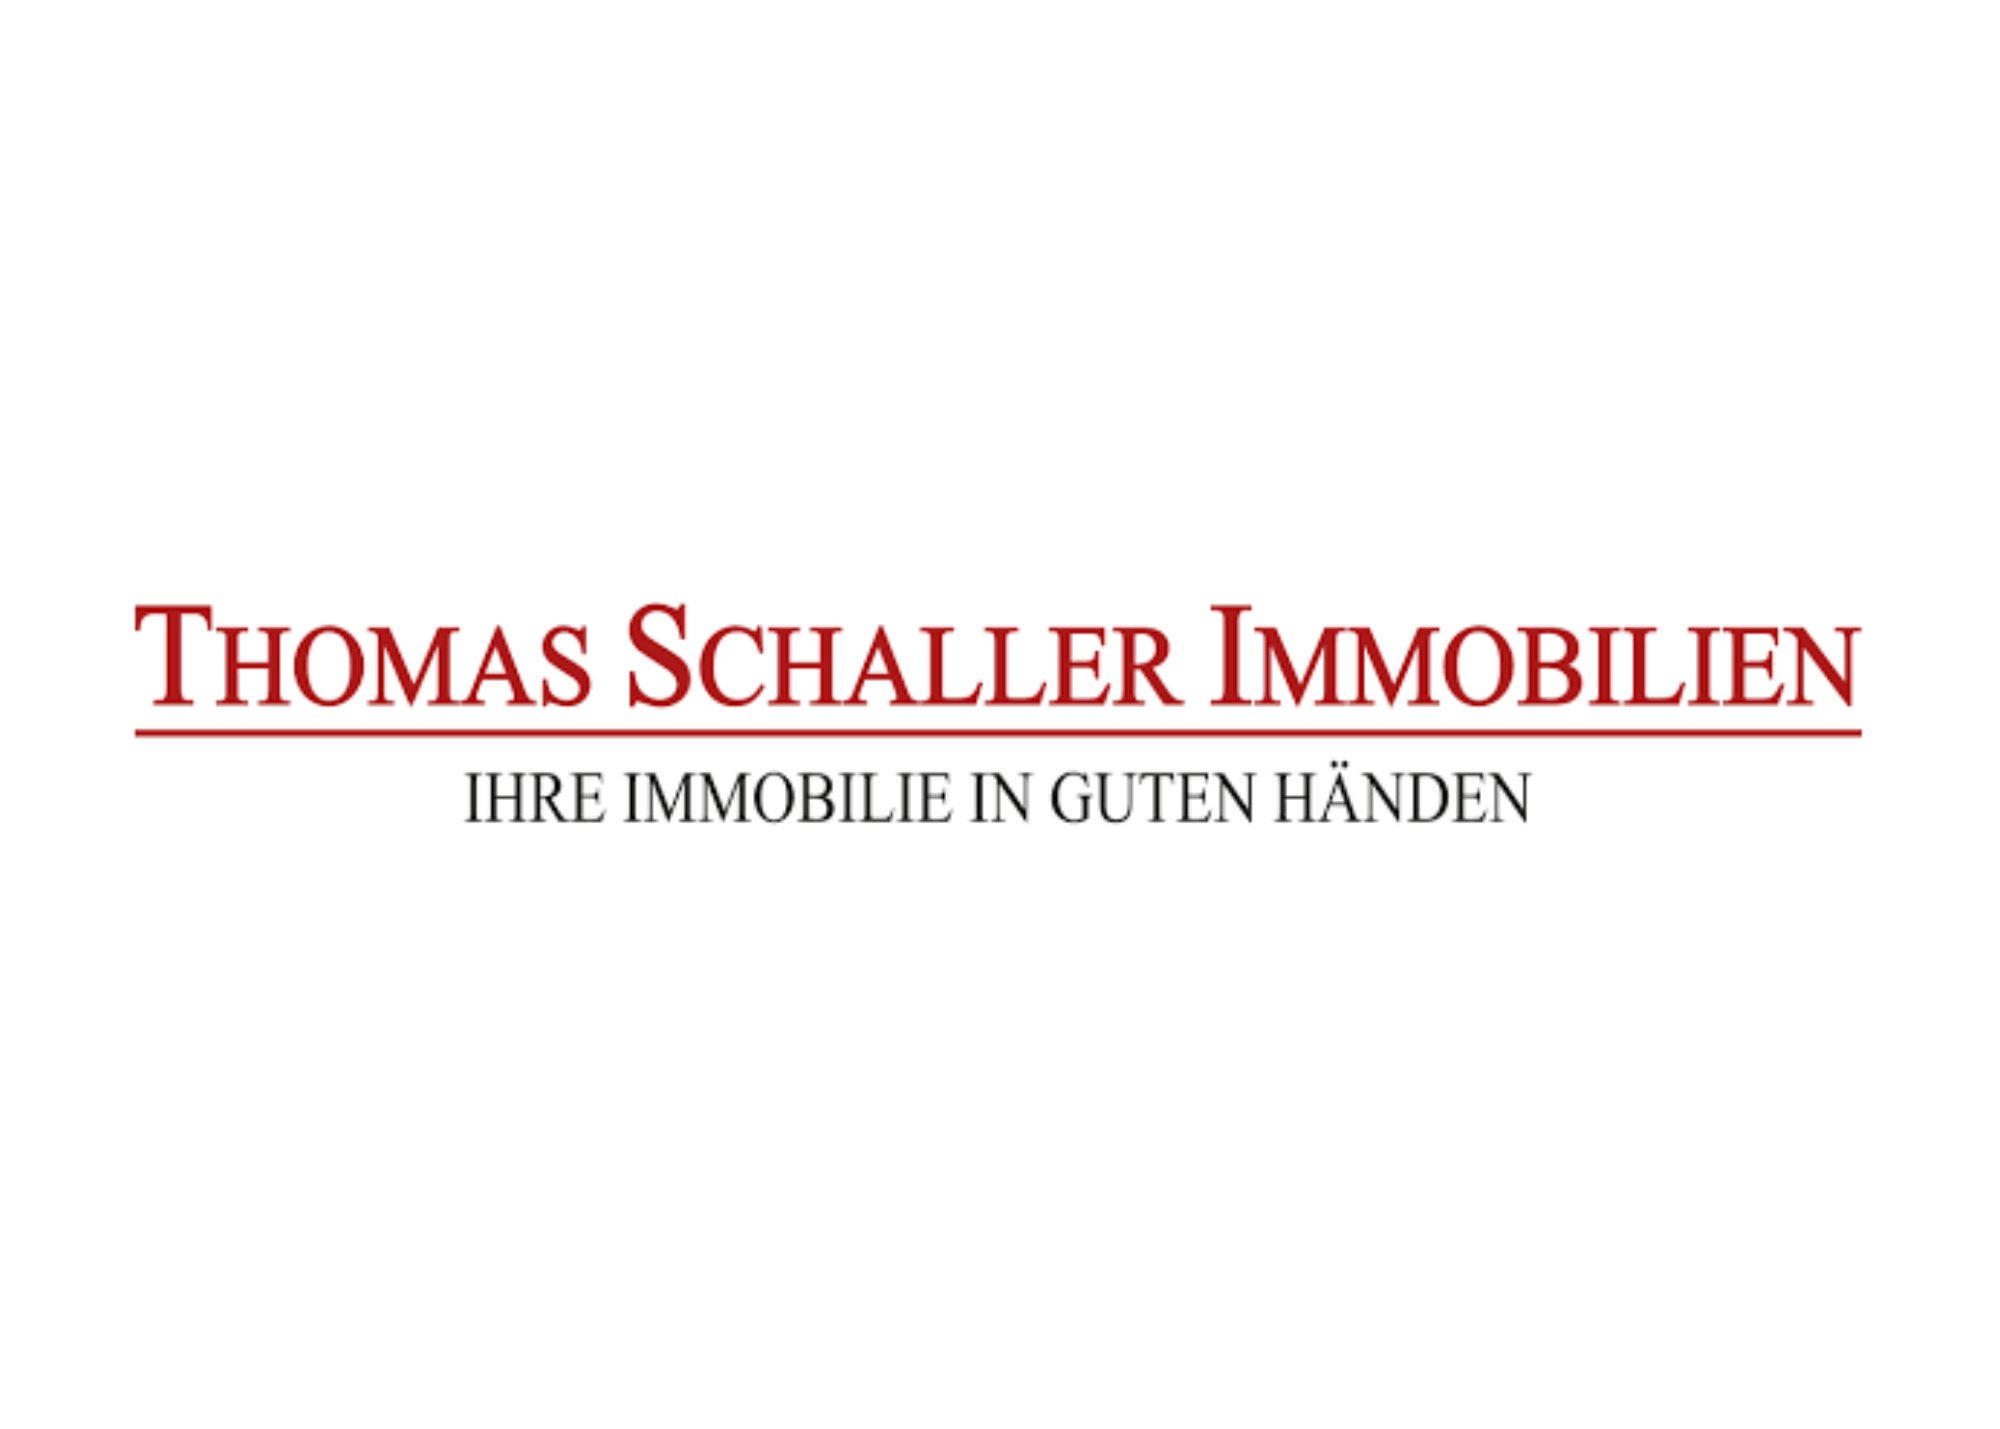 Thomas Schaller Immobilien